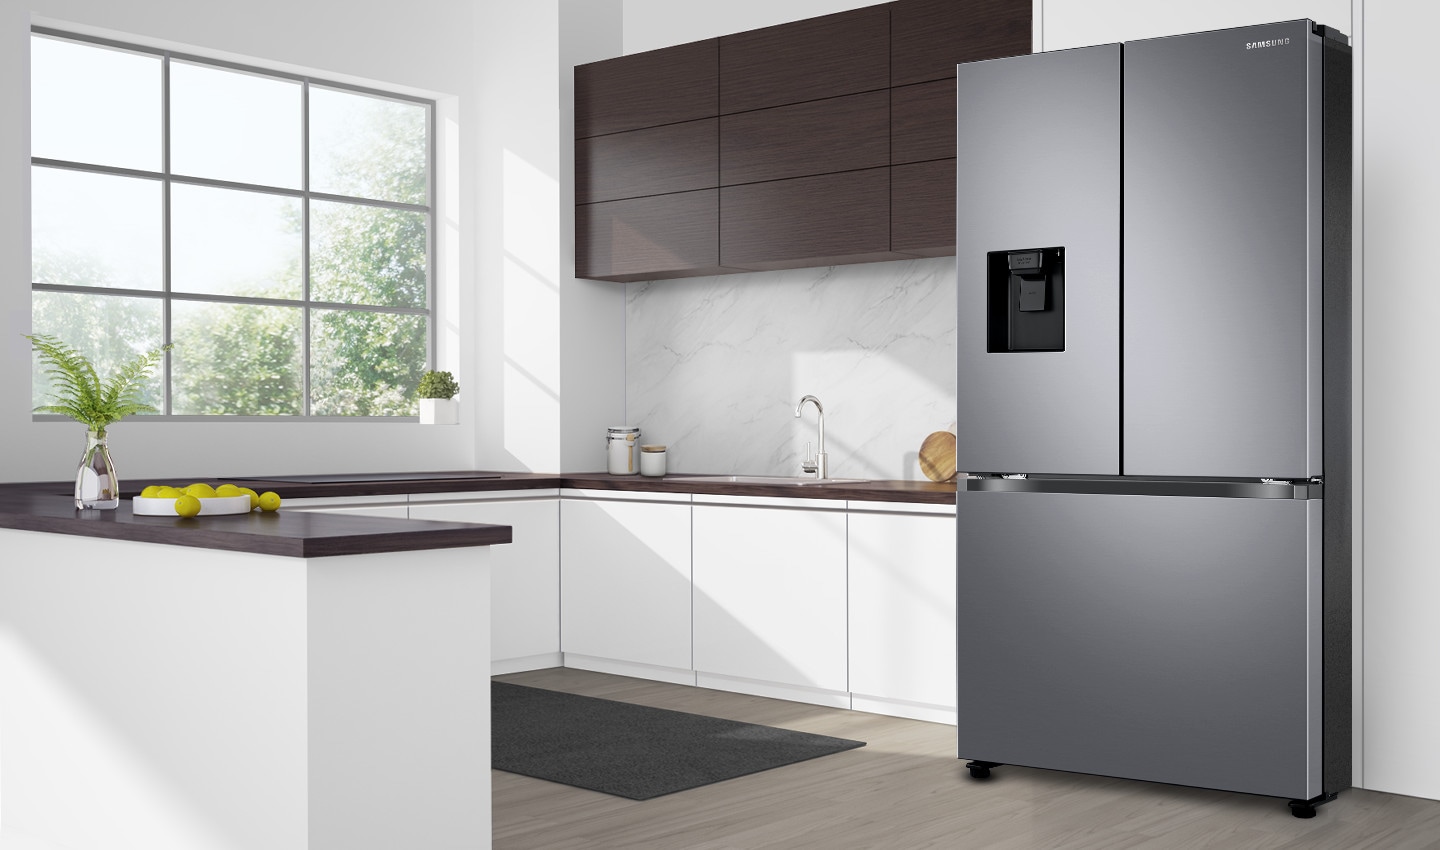 SAMSUNG French Refrigerator 470L A+ - Silver